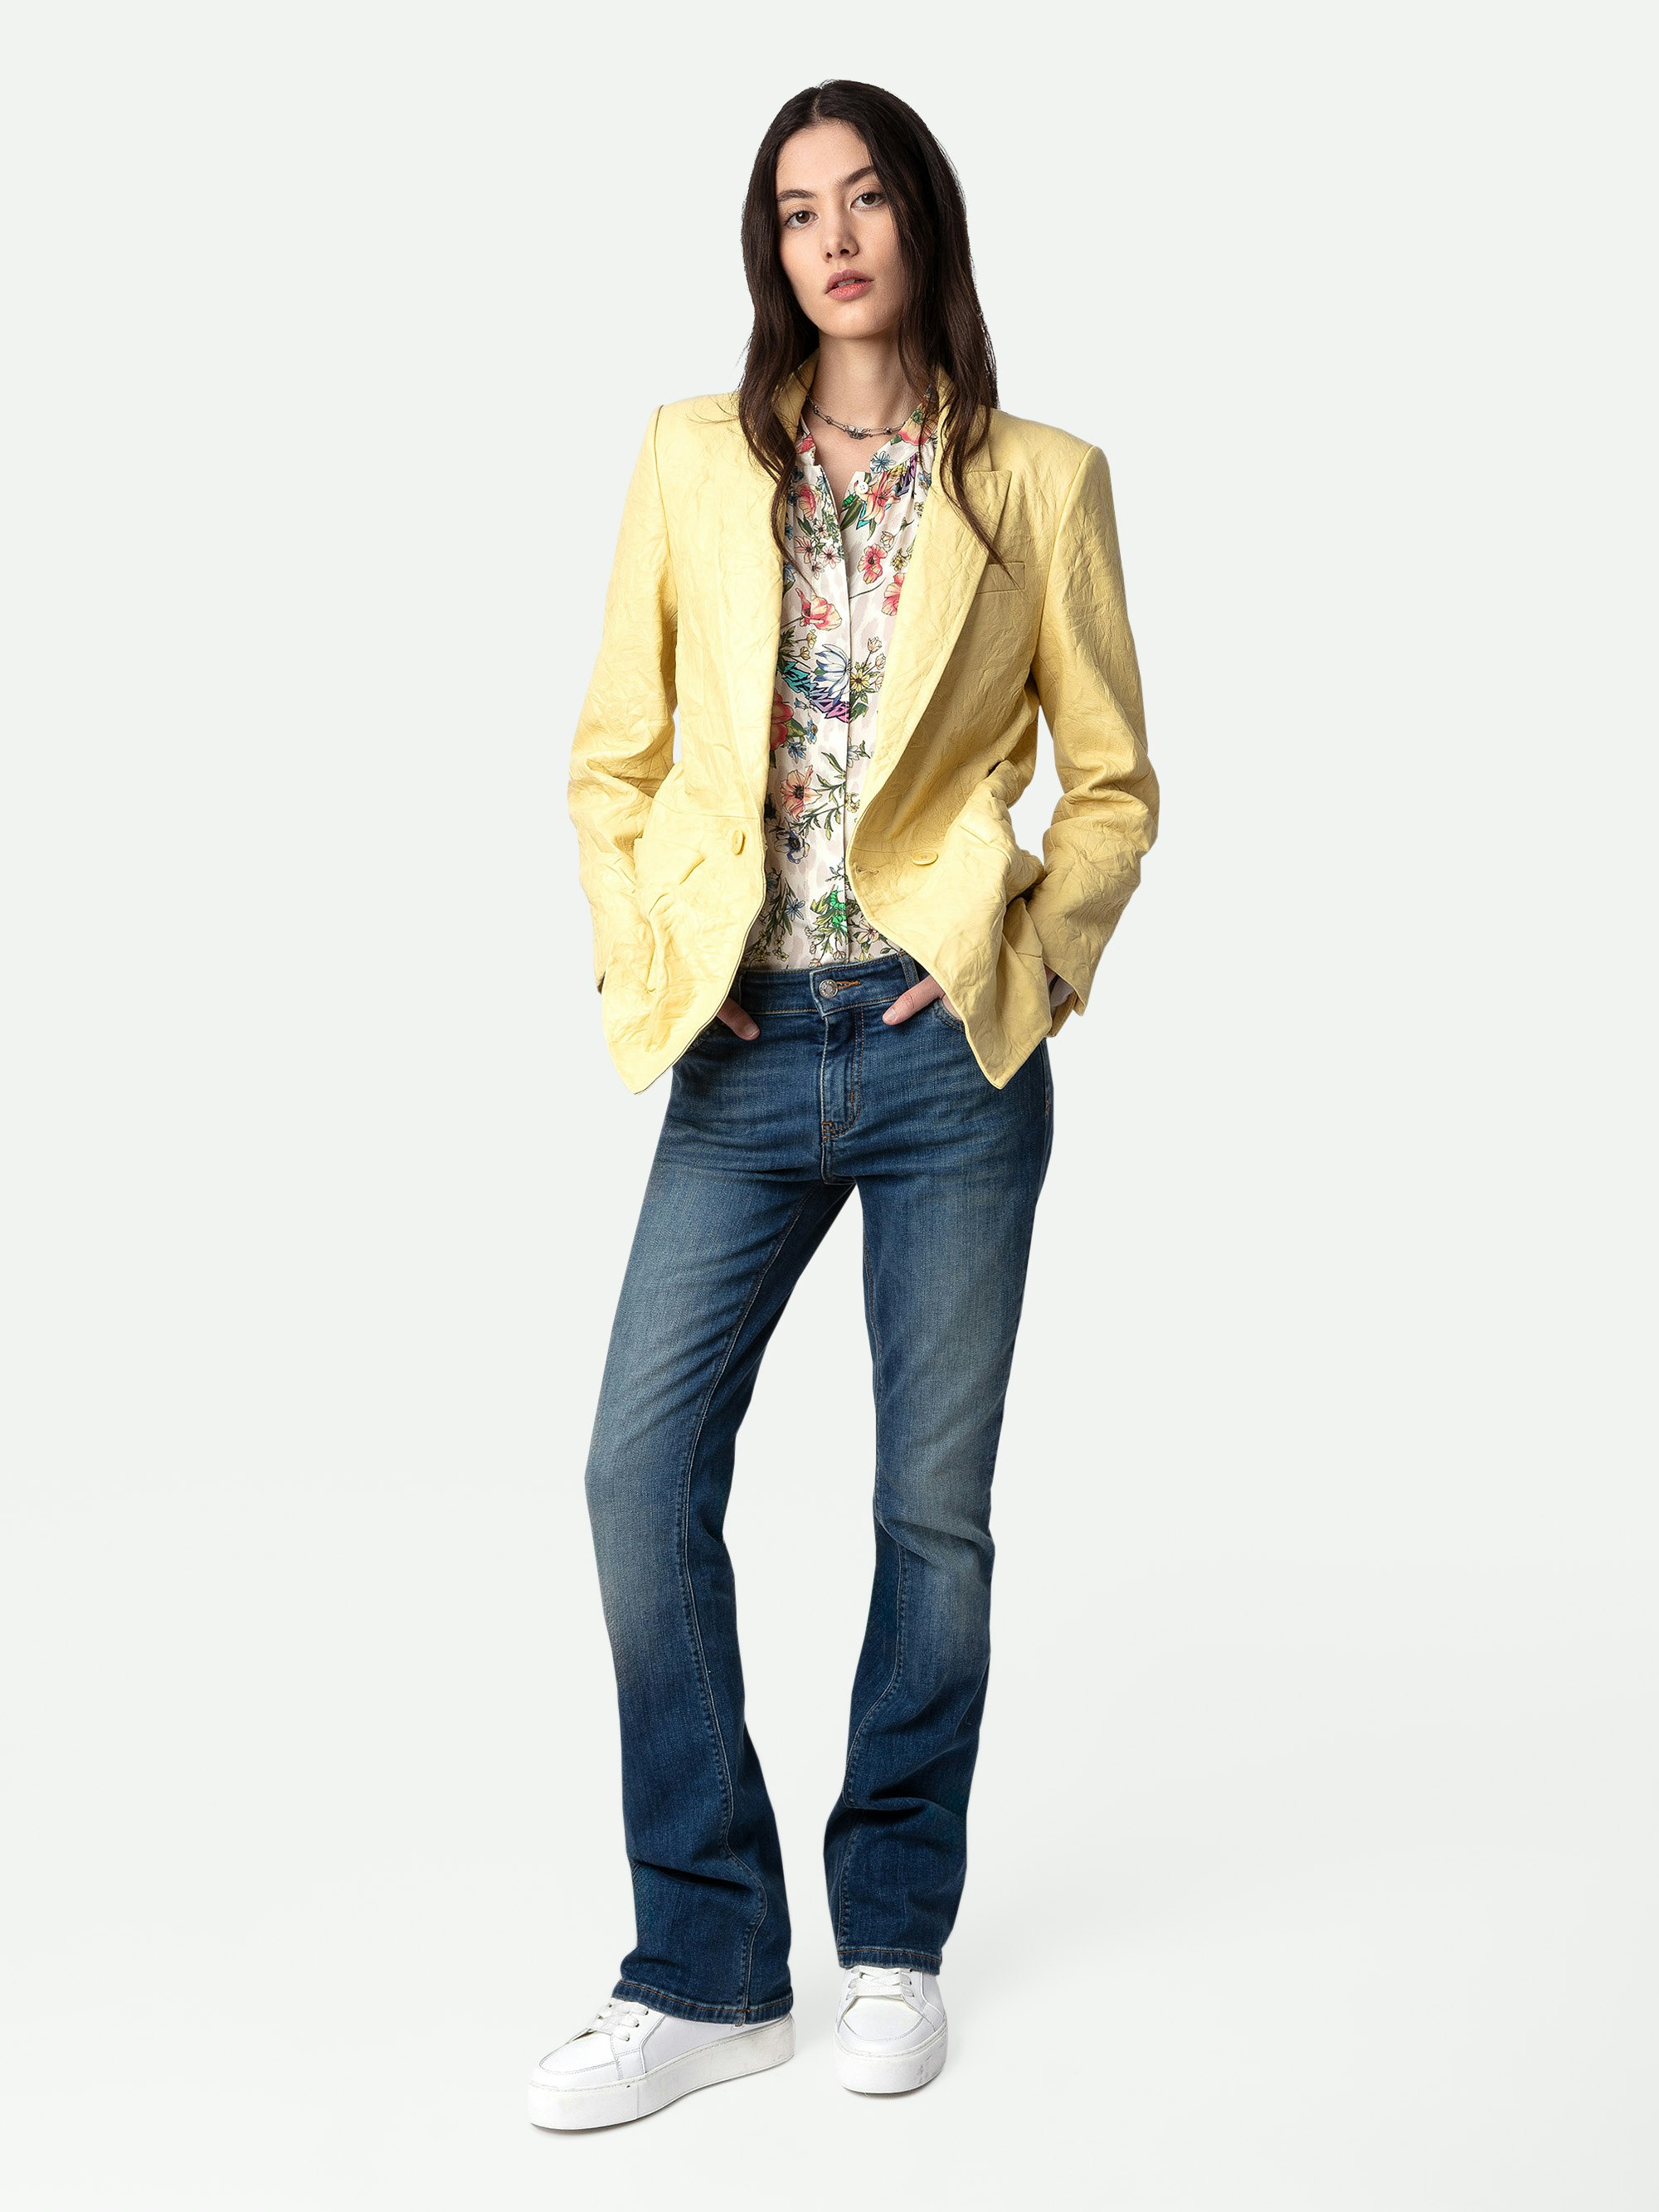 Visko Crinkled Leather Blazer - Women’s light yellow crinkled leather blazer with button fastening and pockets.